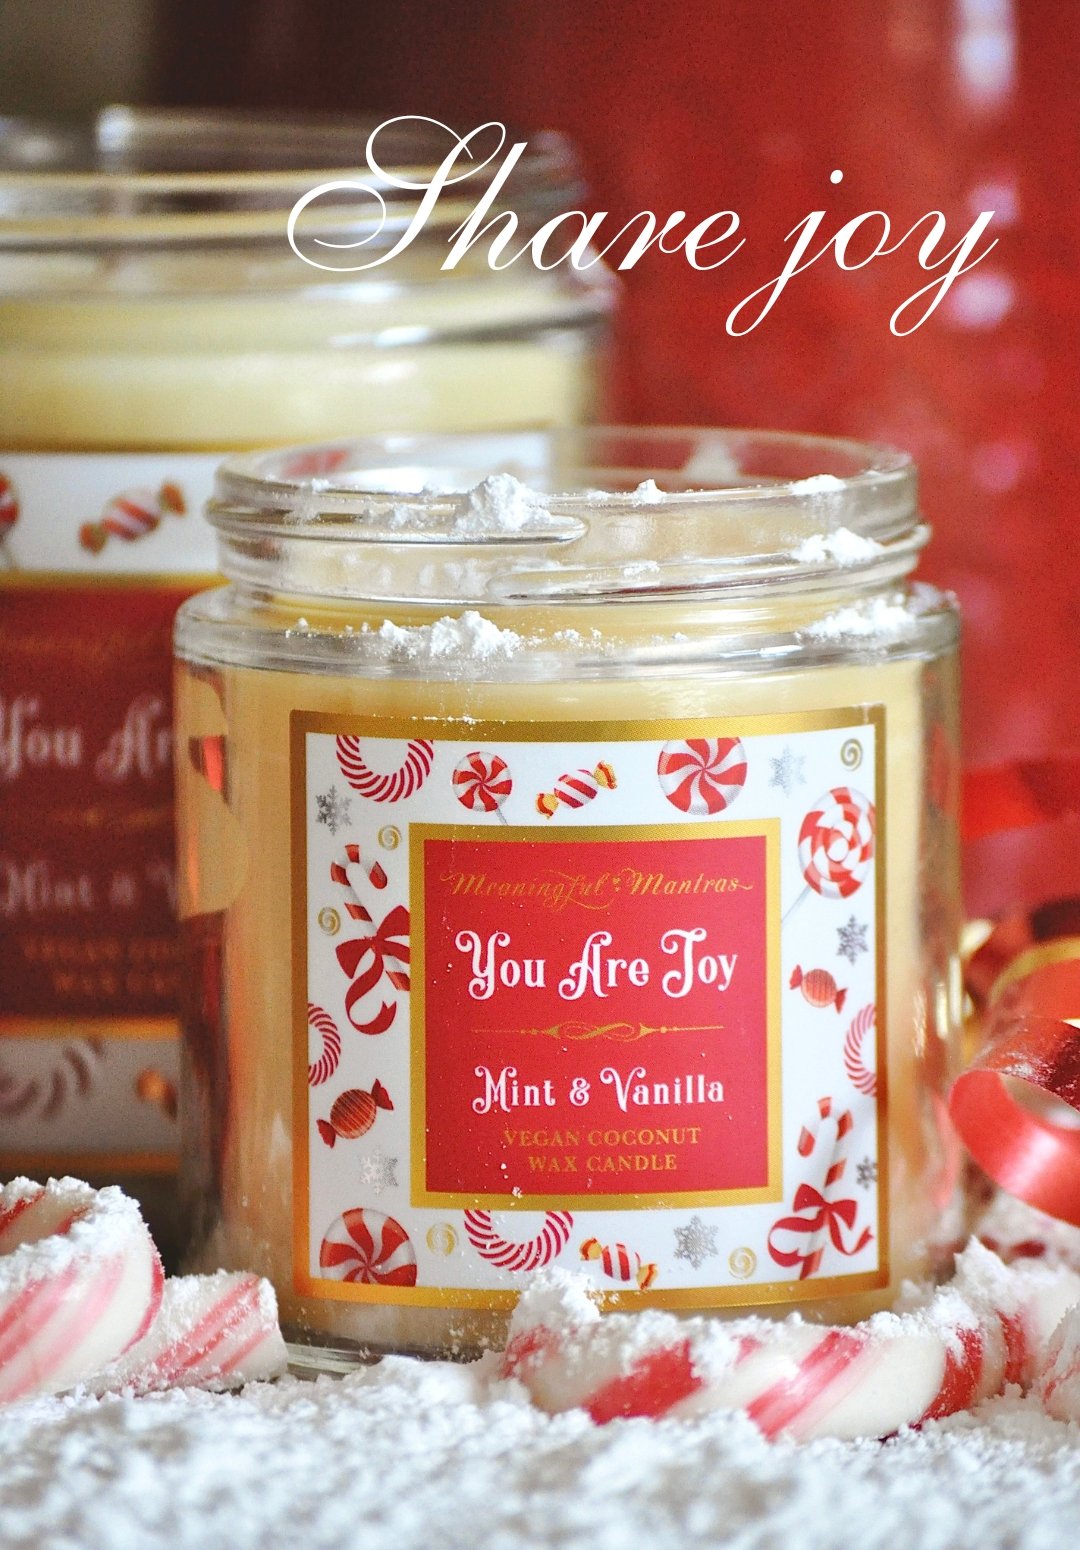 You Are Joy Mint & Vanilla Mini Candle